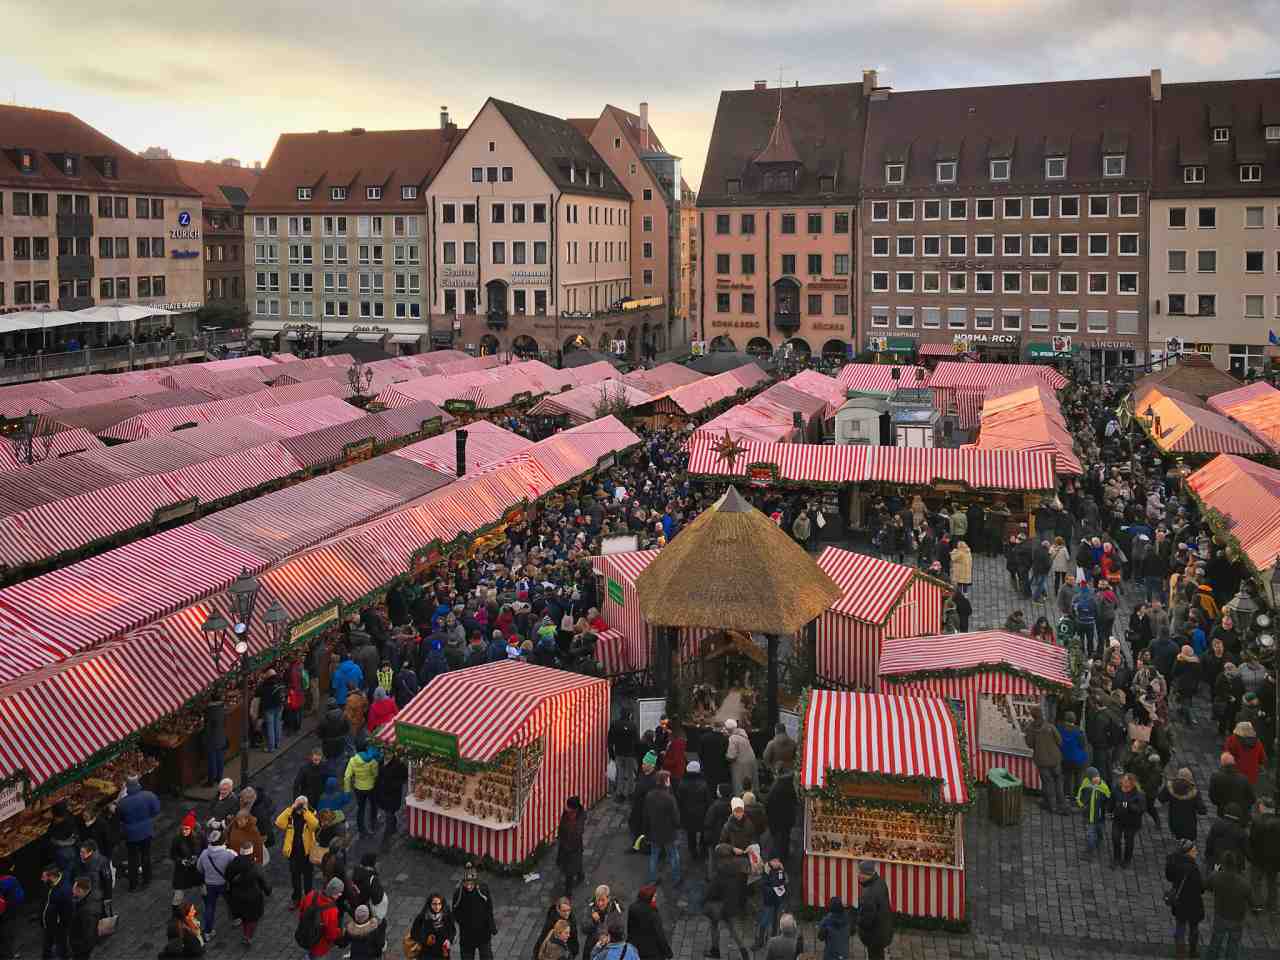 Christkindlesmarkt Christmas market, Nuremberg, Germany